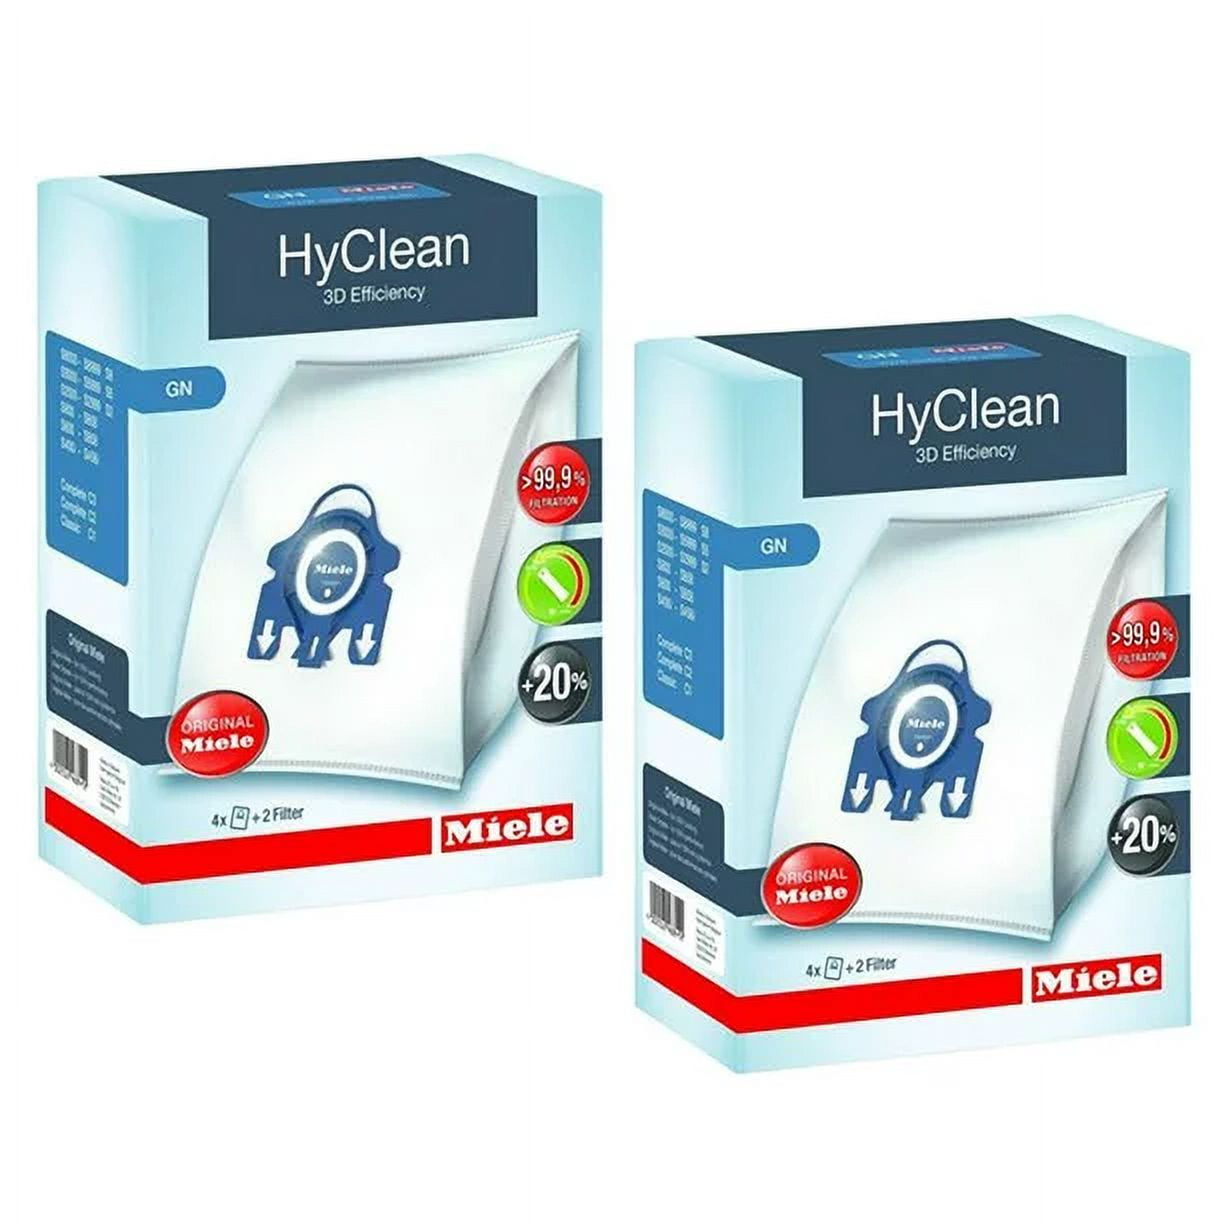 Miele dustbags HyClean 3D Efficiency GN